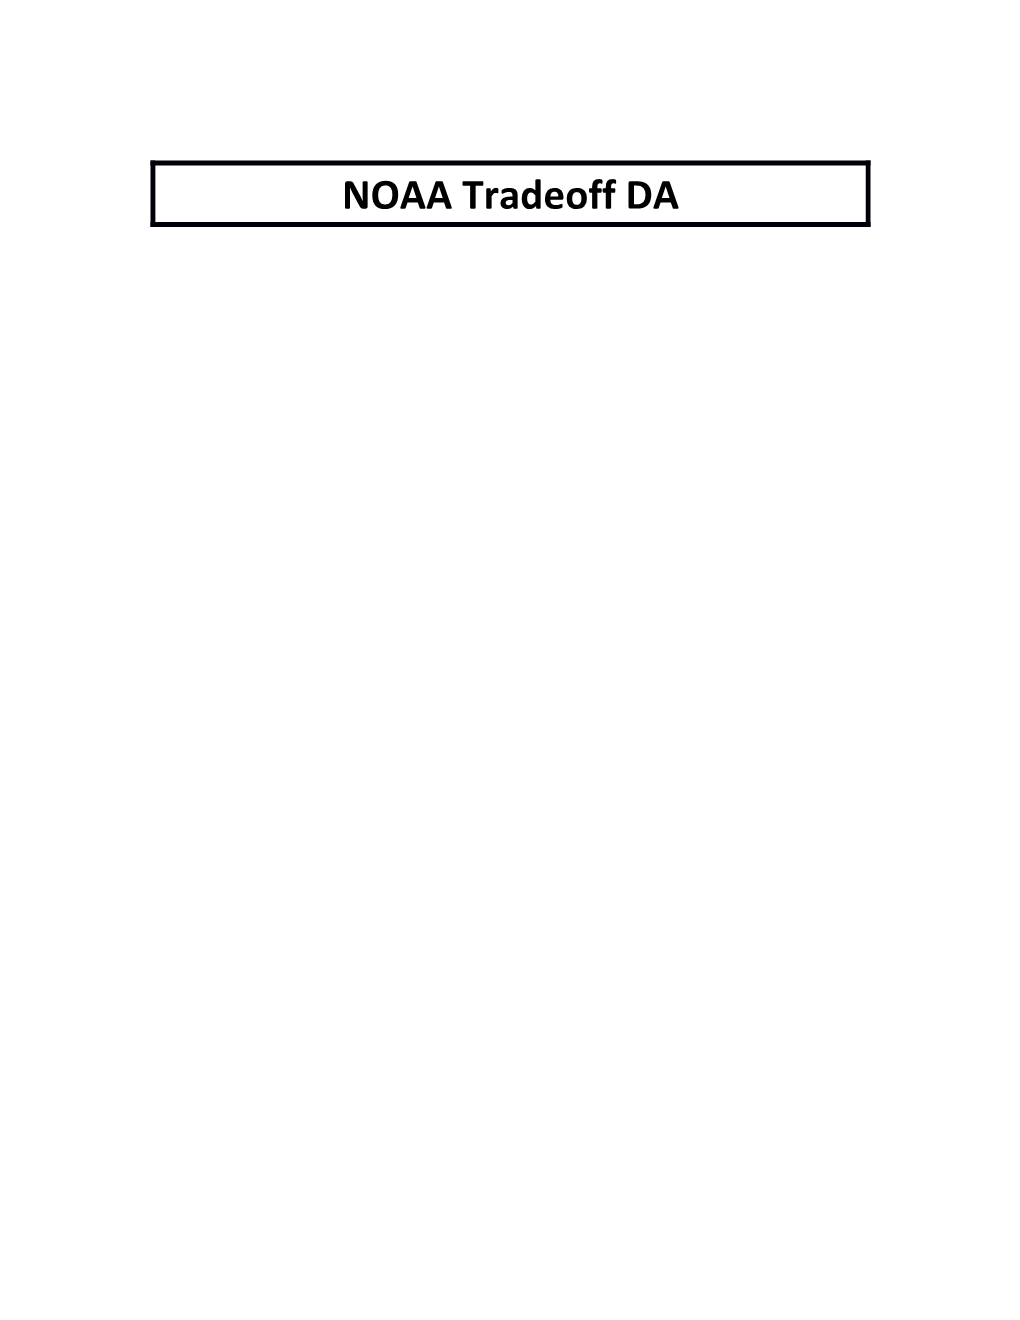 NOAA Tradeoff DA